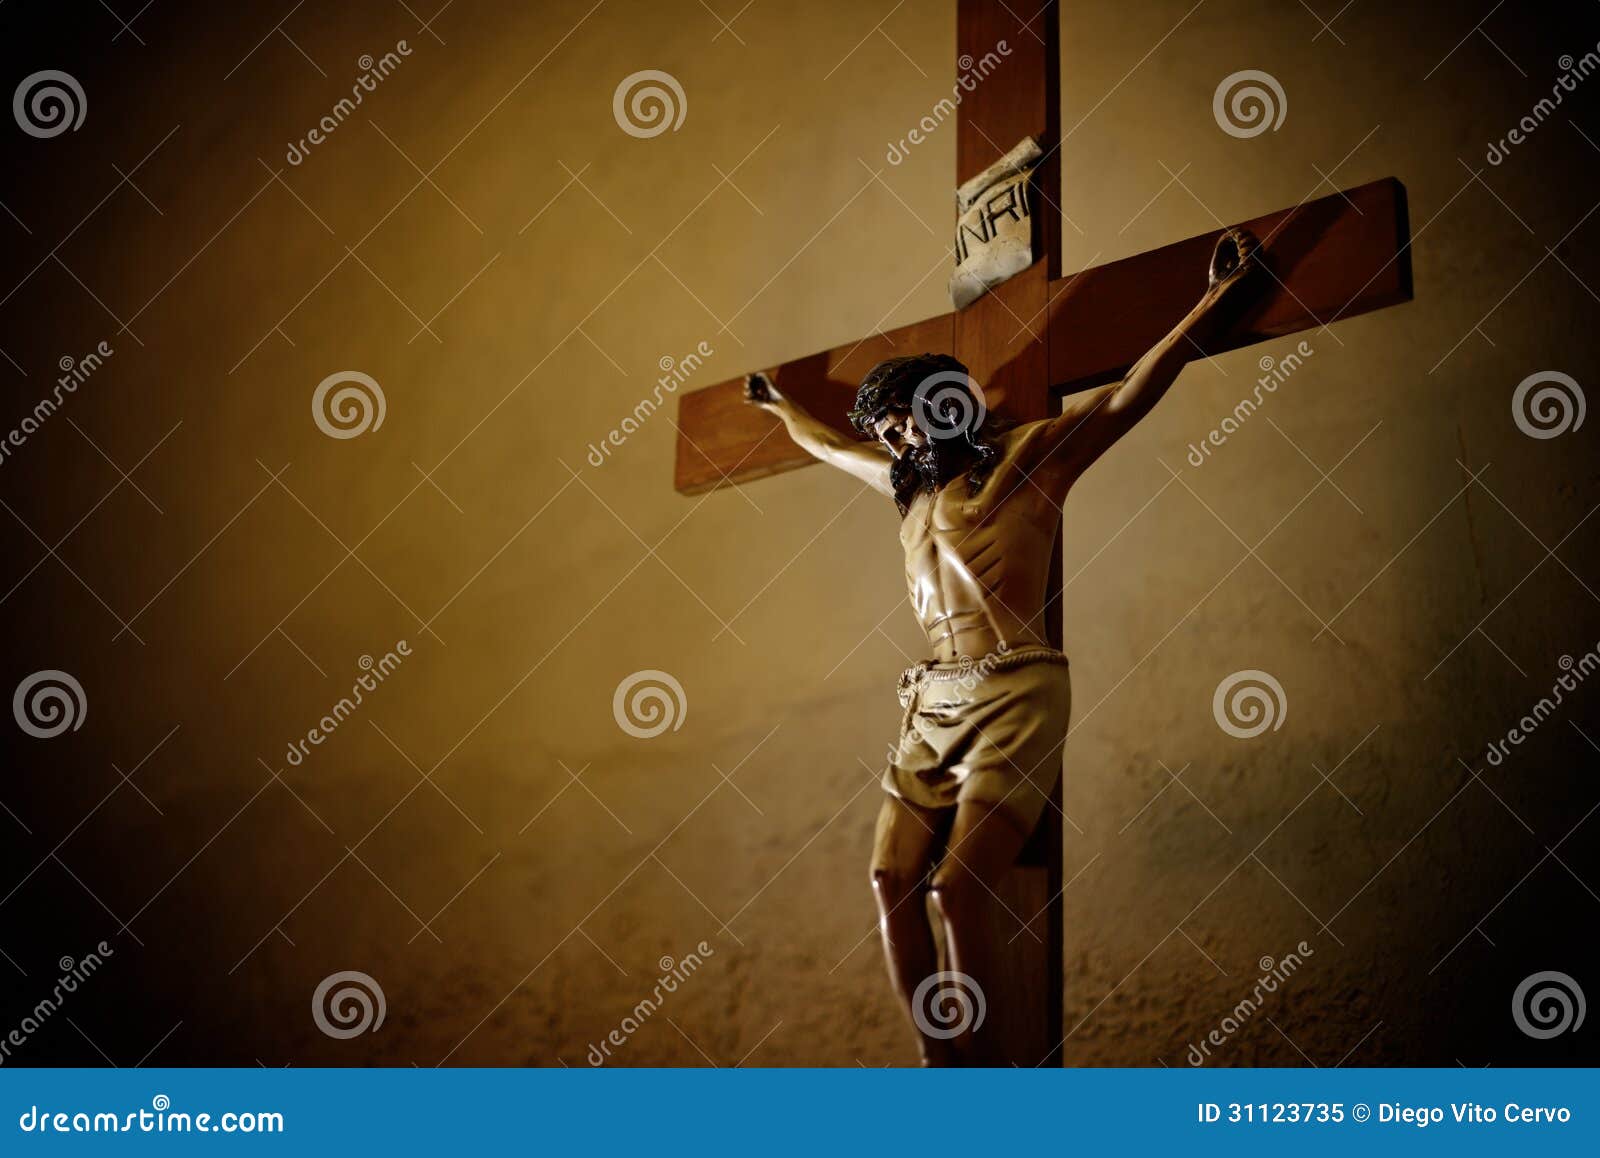 catholic church and jesus christ on crucifix